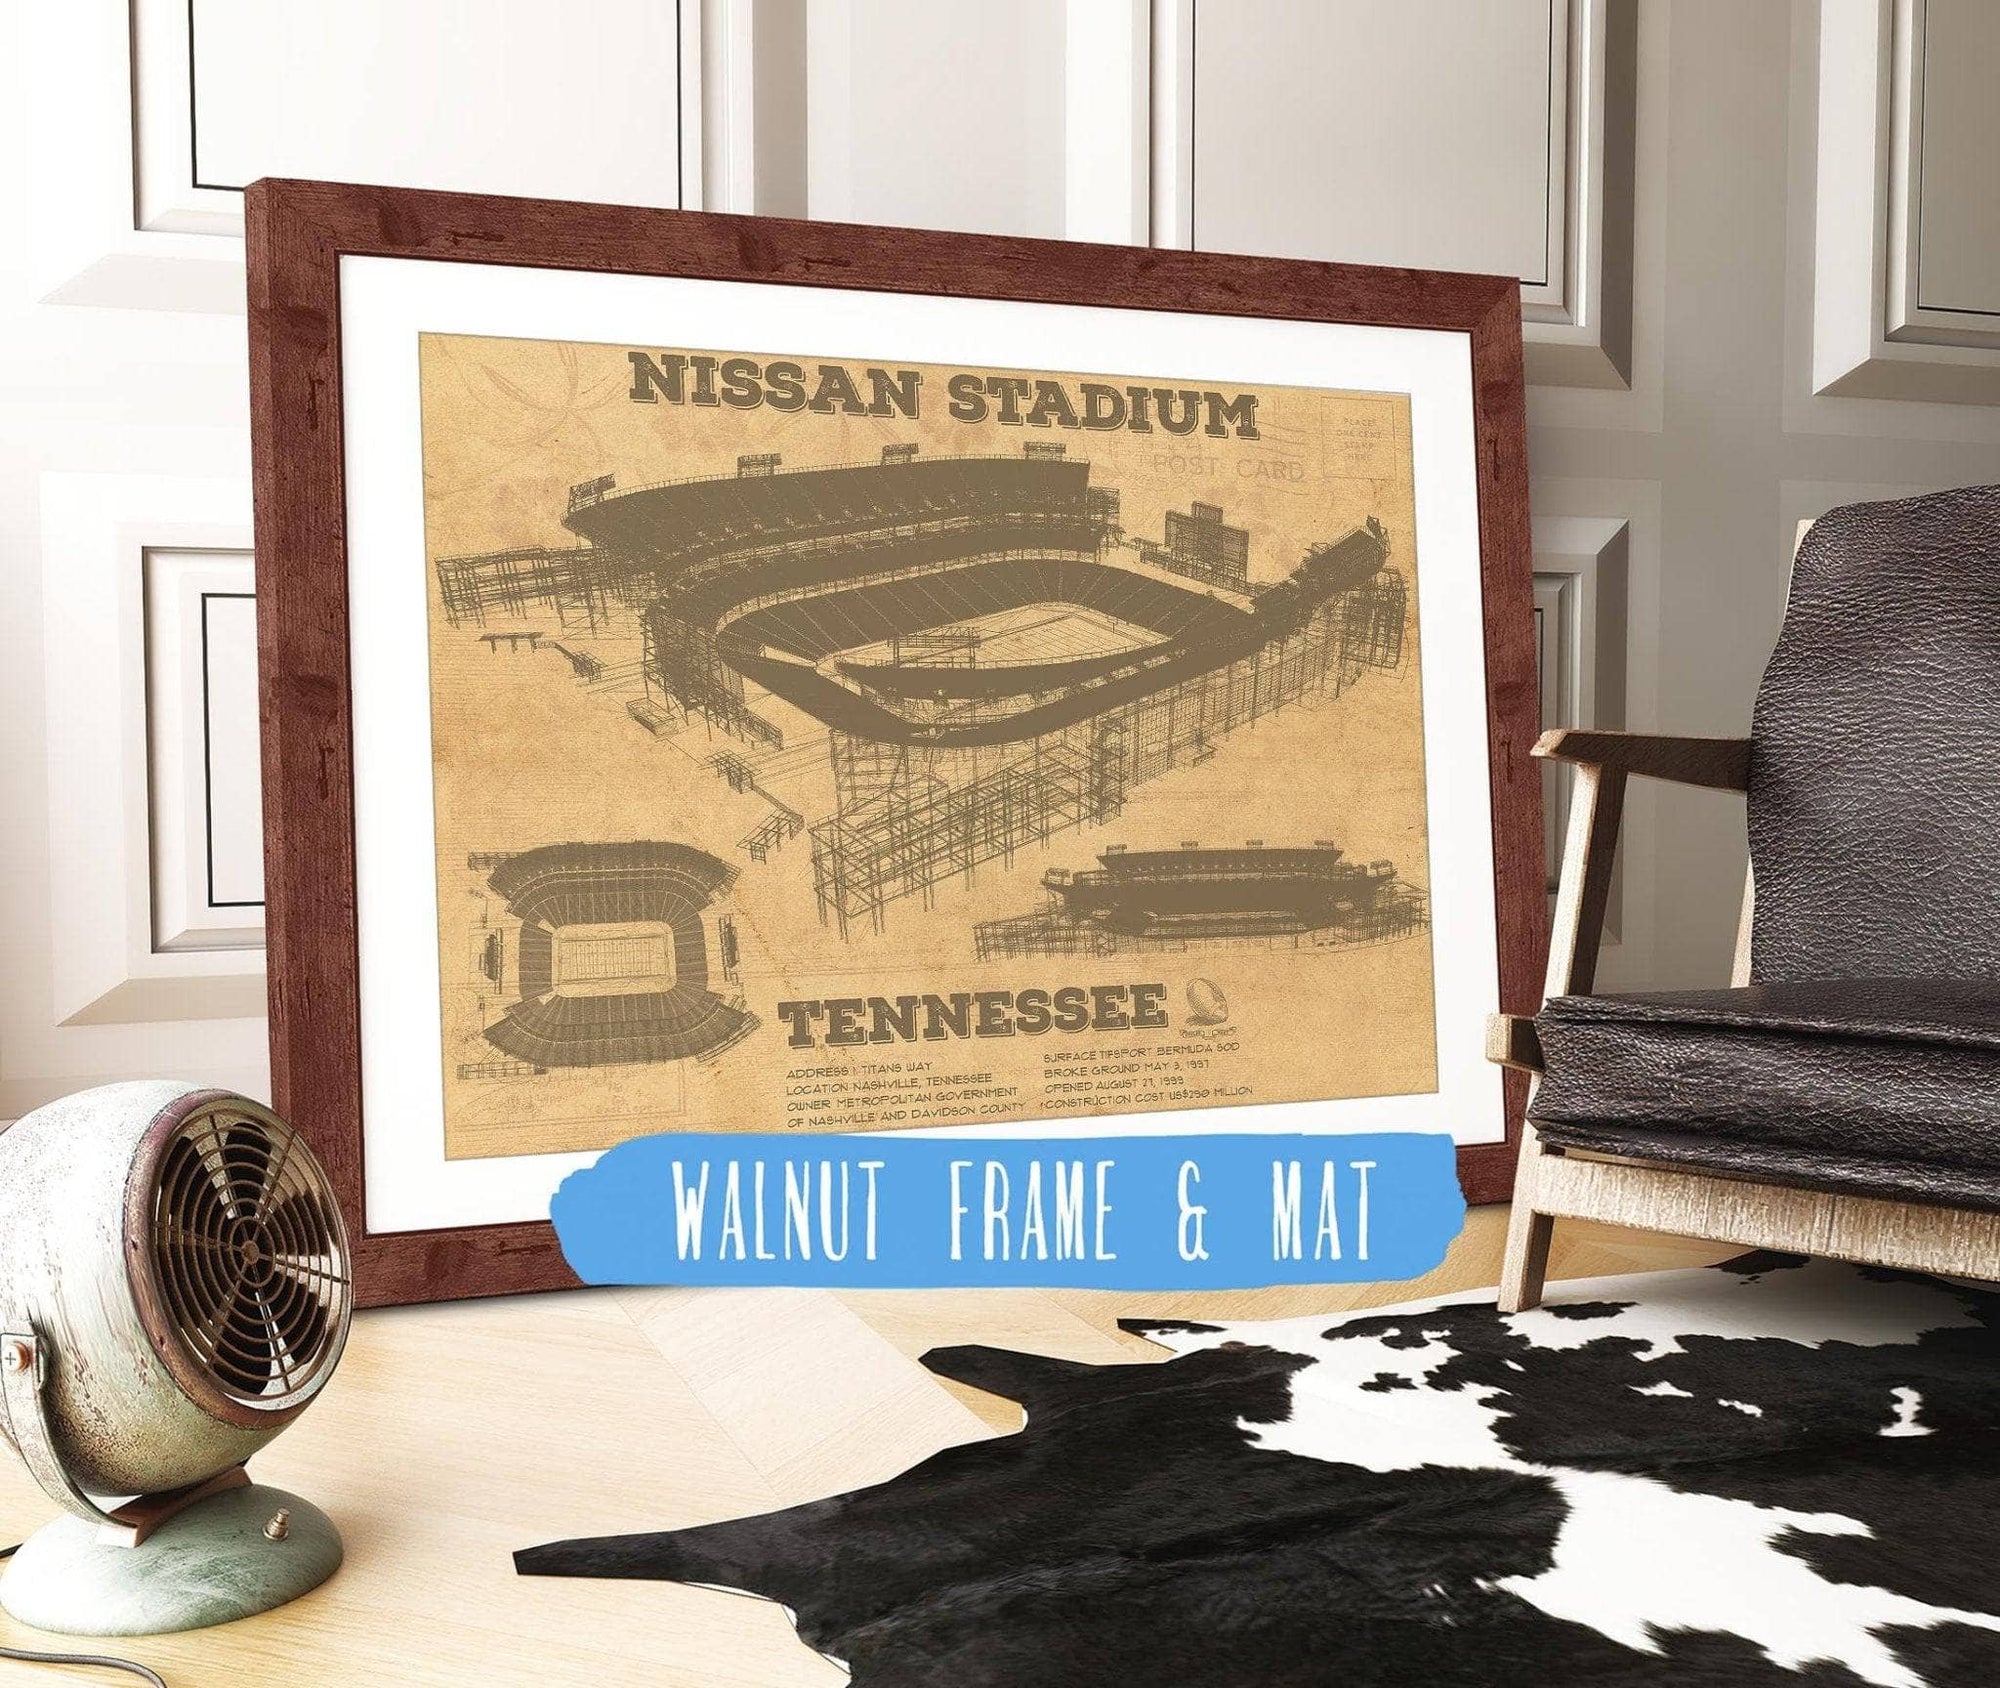 Cutler West Pro Football Collection 14" x 11" / Walnut Frame & Mat Tennessee Titans Nissan Stadium - Vintage Football Print 723978276_71091